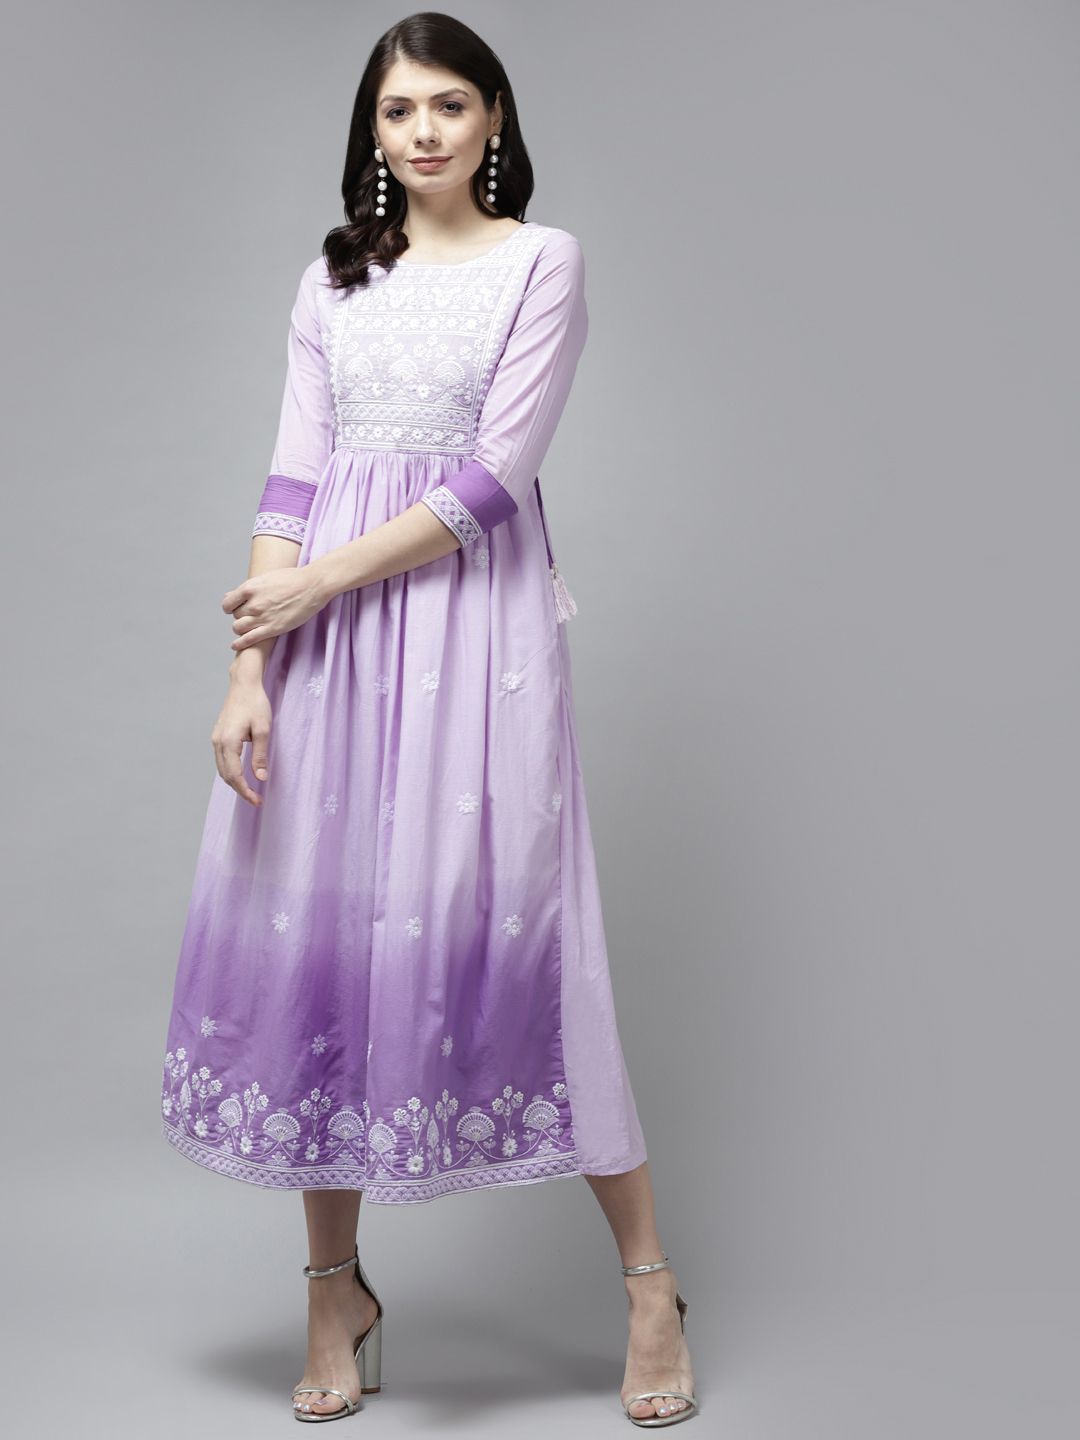 Yufta Lavender Ethnic Motifs Embroidered Cotton Ethnic Midi Dress Price in India